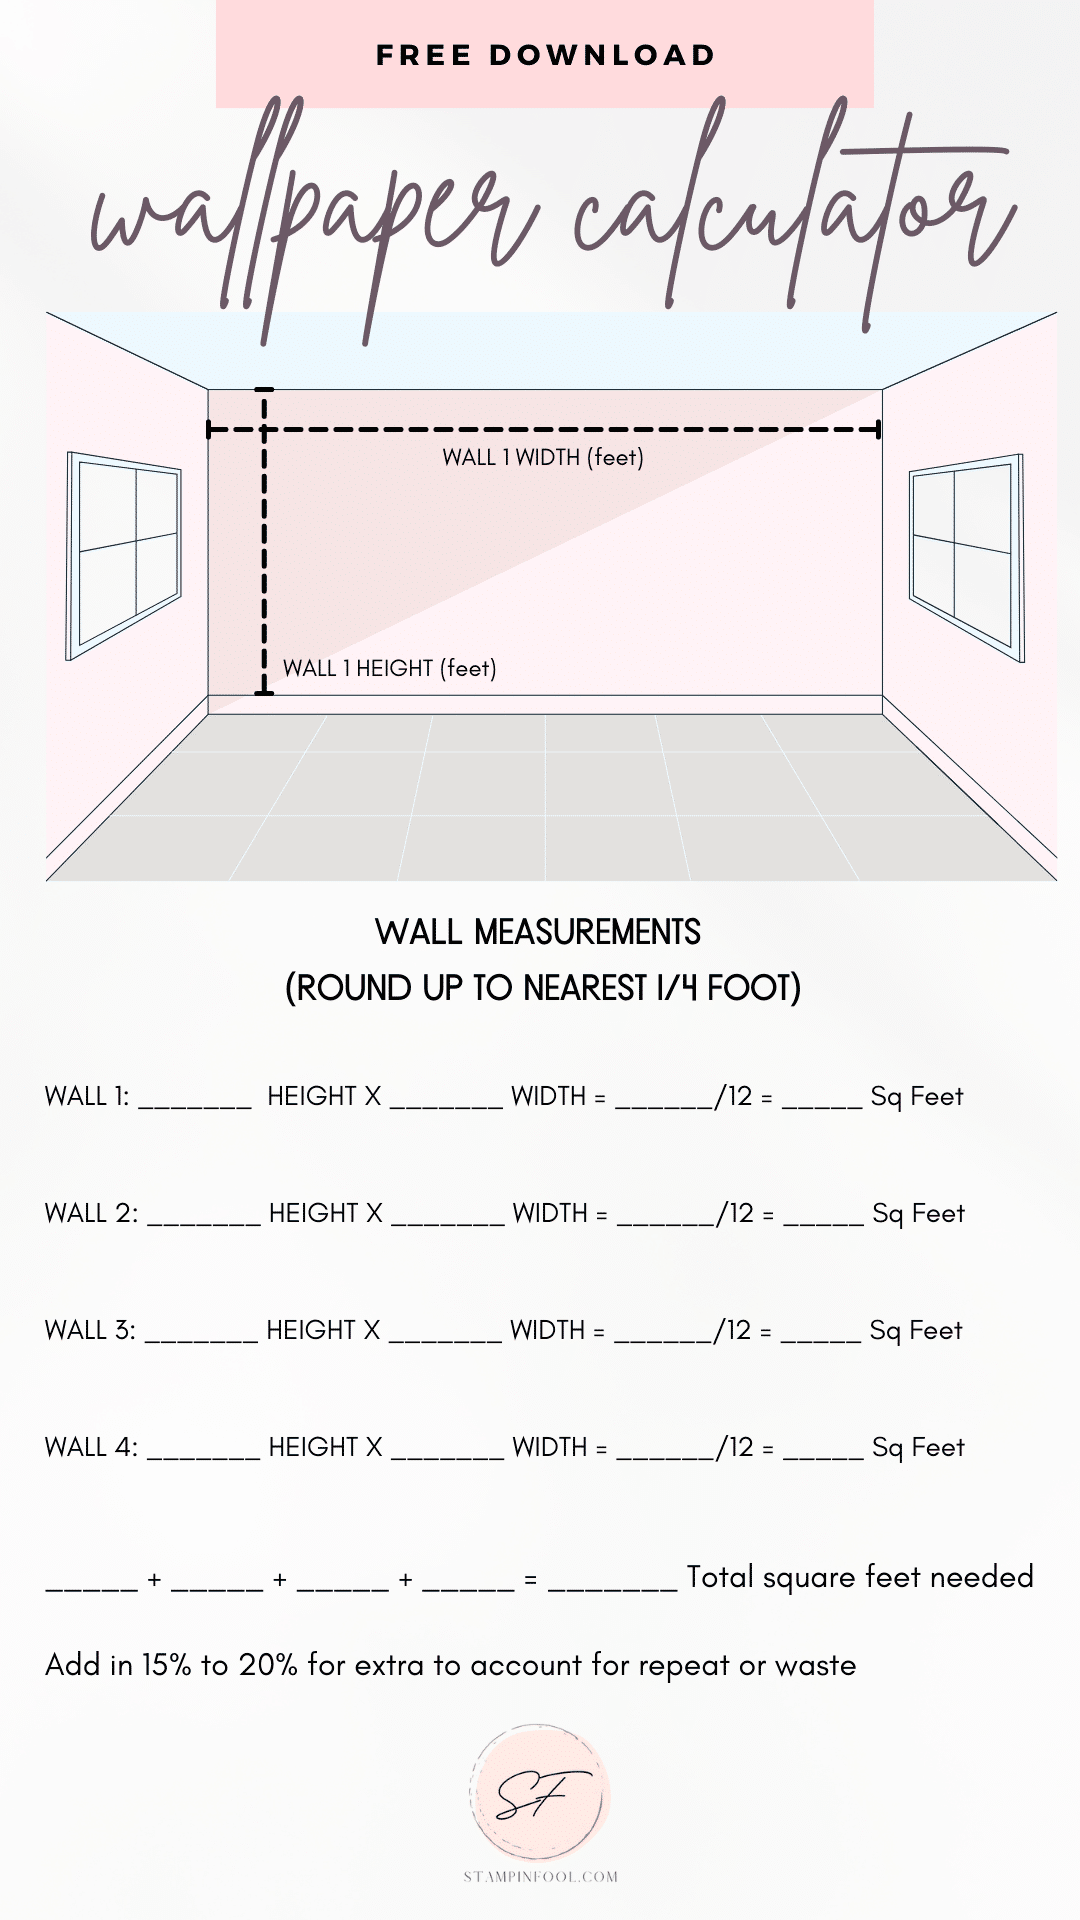 Peel and Stick wallpaper calculator chart